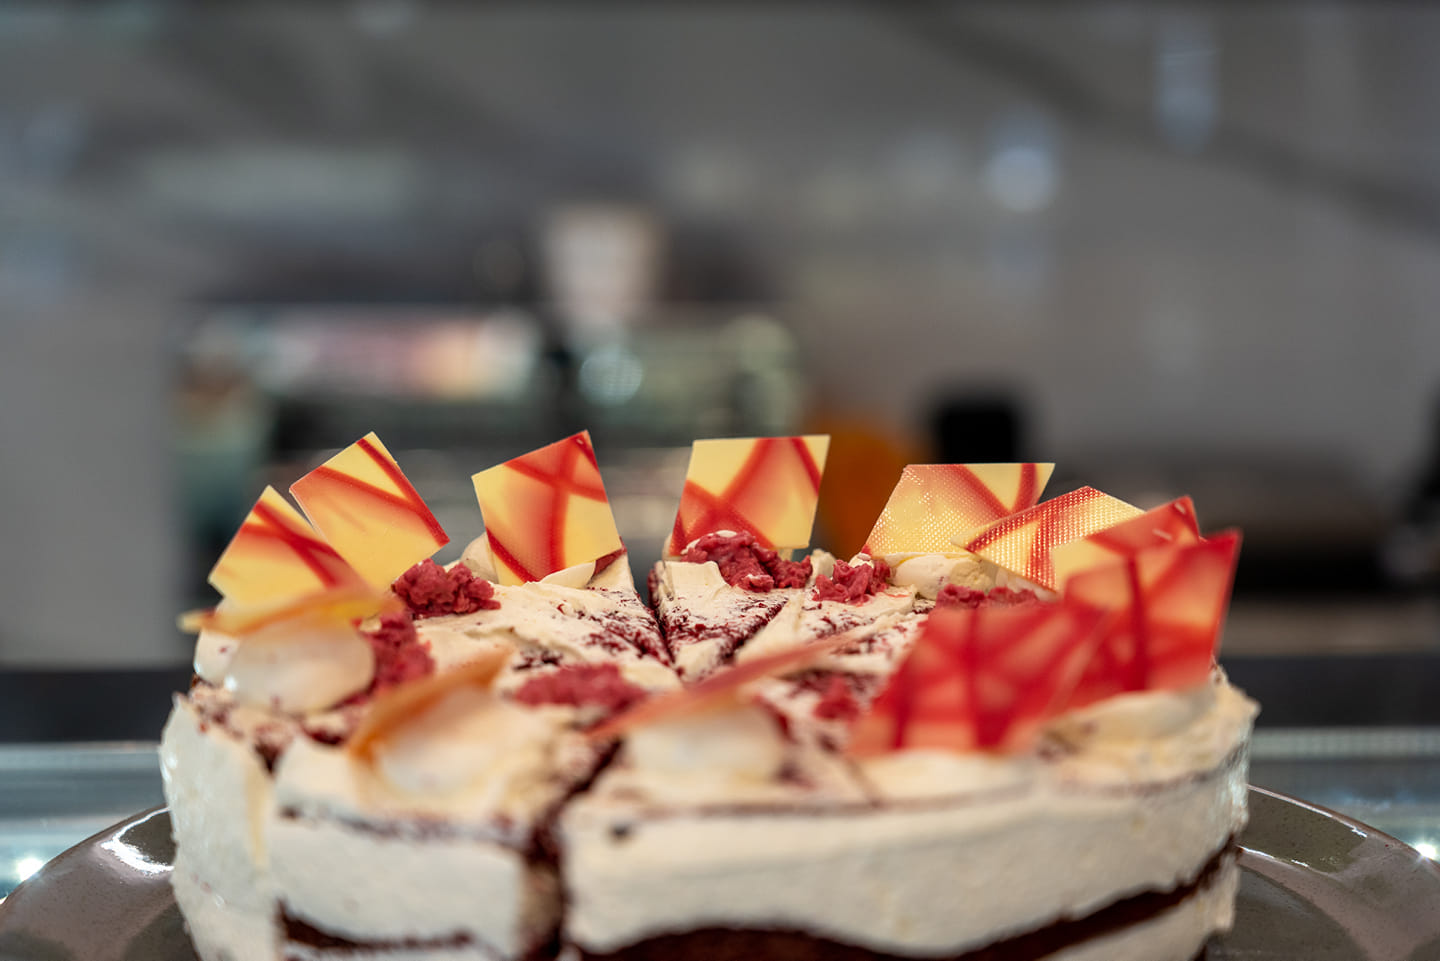 TRE STELLE : Ένα υπέροχο γλυκοπωλείο σάς περιμένει στα Βόρεια, βρίσκεται στο Μαρούσι και είναι το στέκι που θα λατρέψετε!!